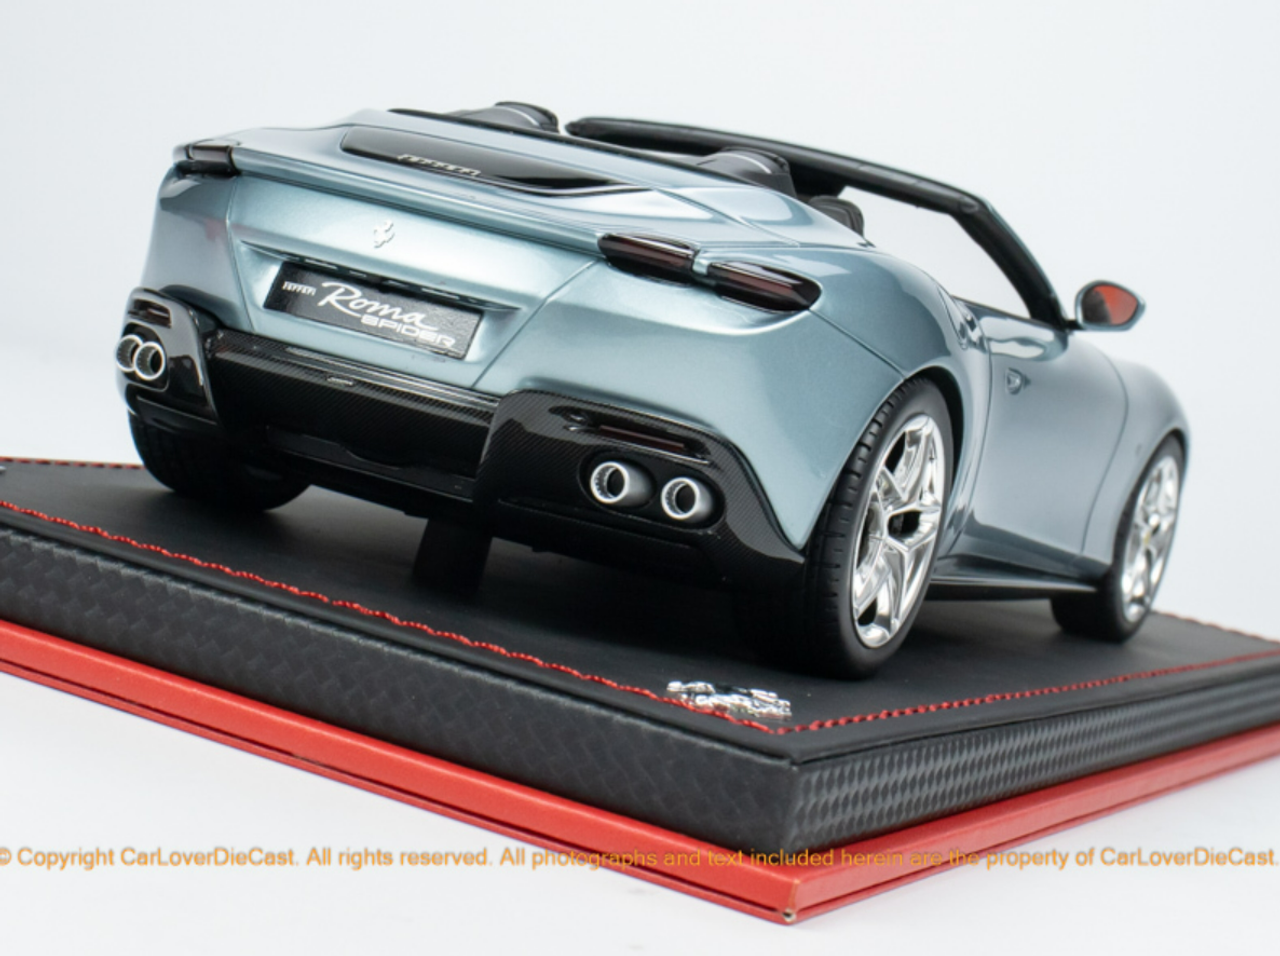 1/18 MR Collection Ferrari ROMA 2023 Convertible sports car model Trevi Blue